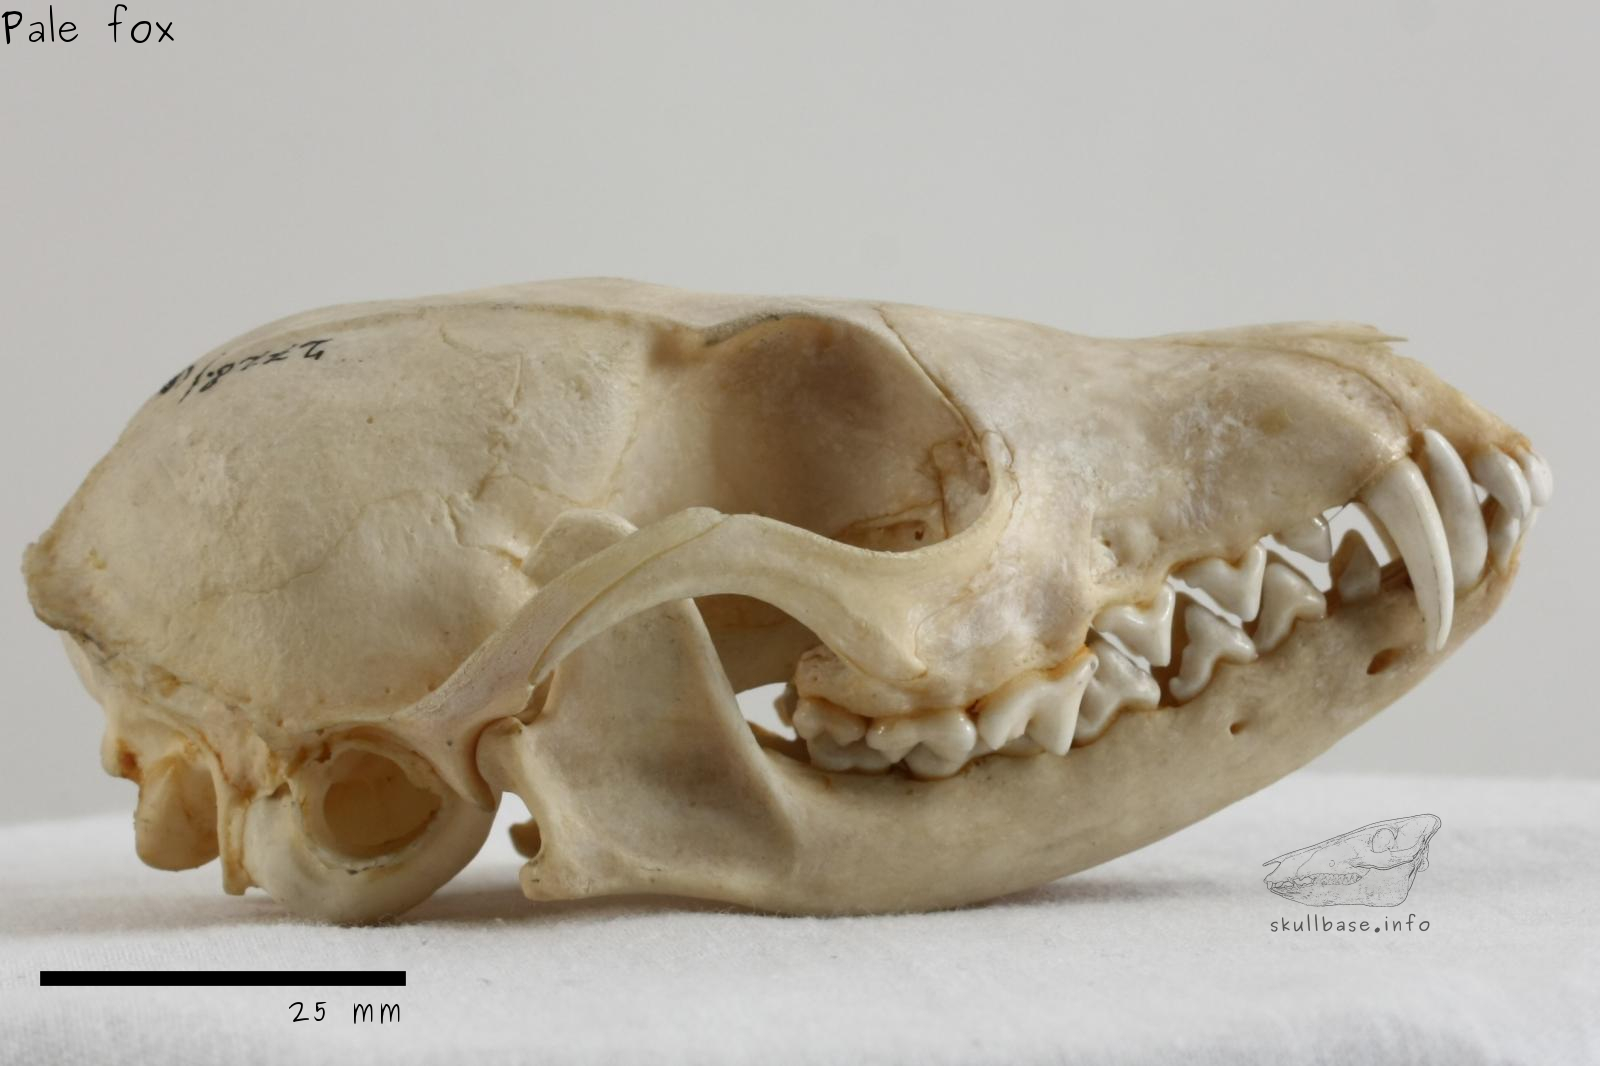 Pale fox (Vulpes pallida) skull lateral view